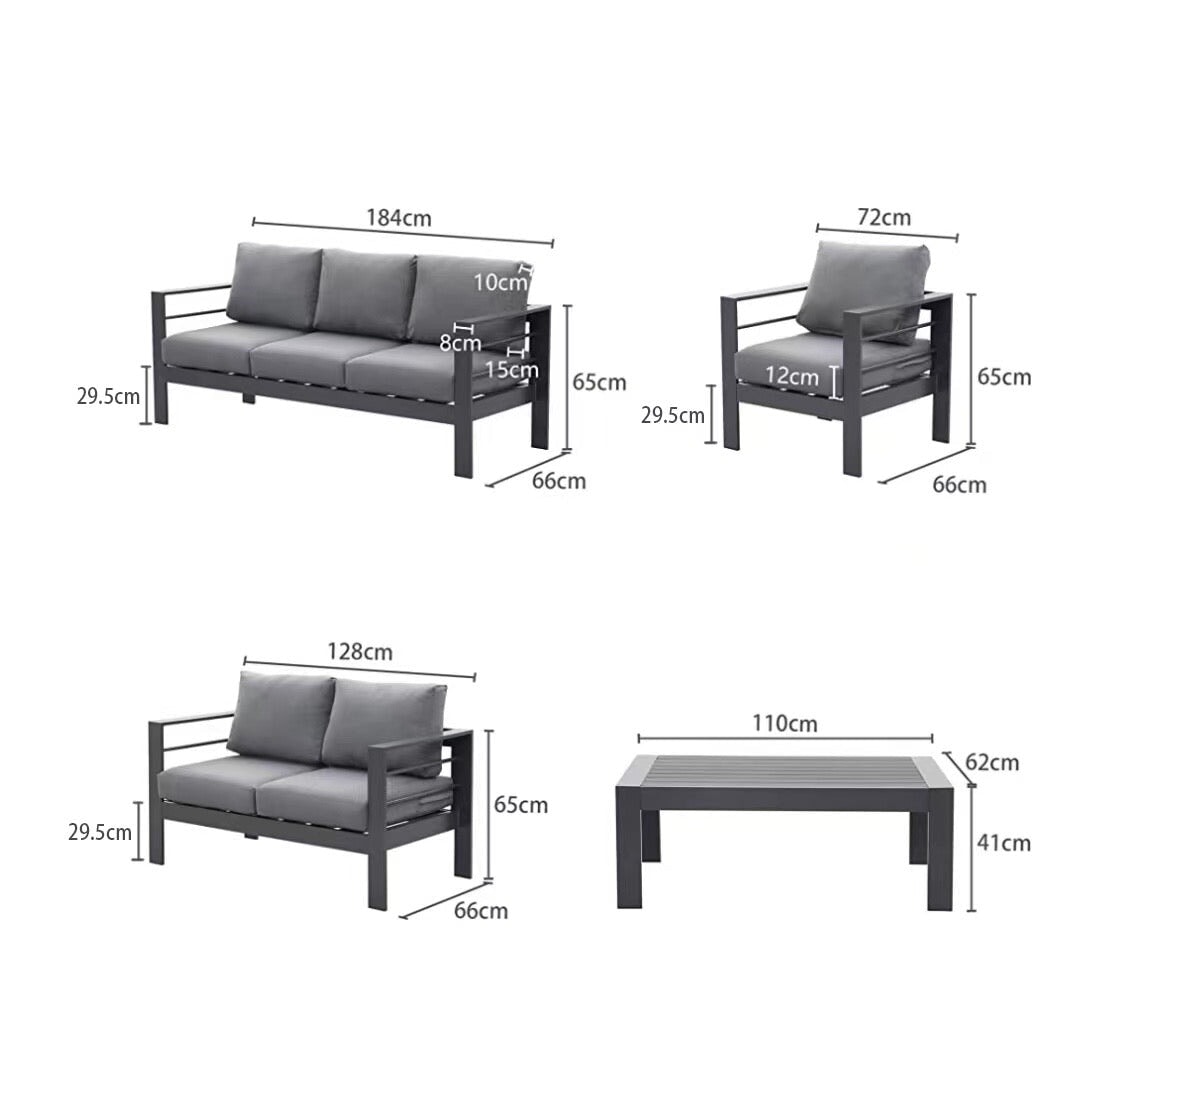 Aluminium 4 Piece Garden Furniture Sofa Set in Grey Rattan Furniture MaxiFurn 